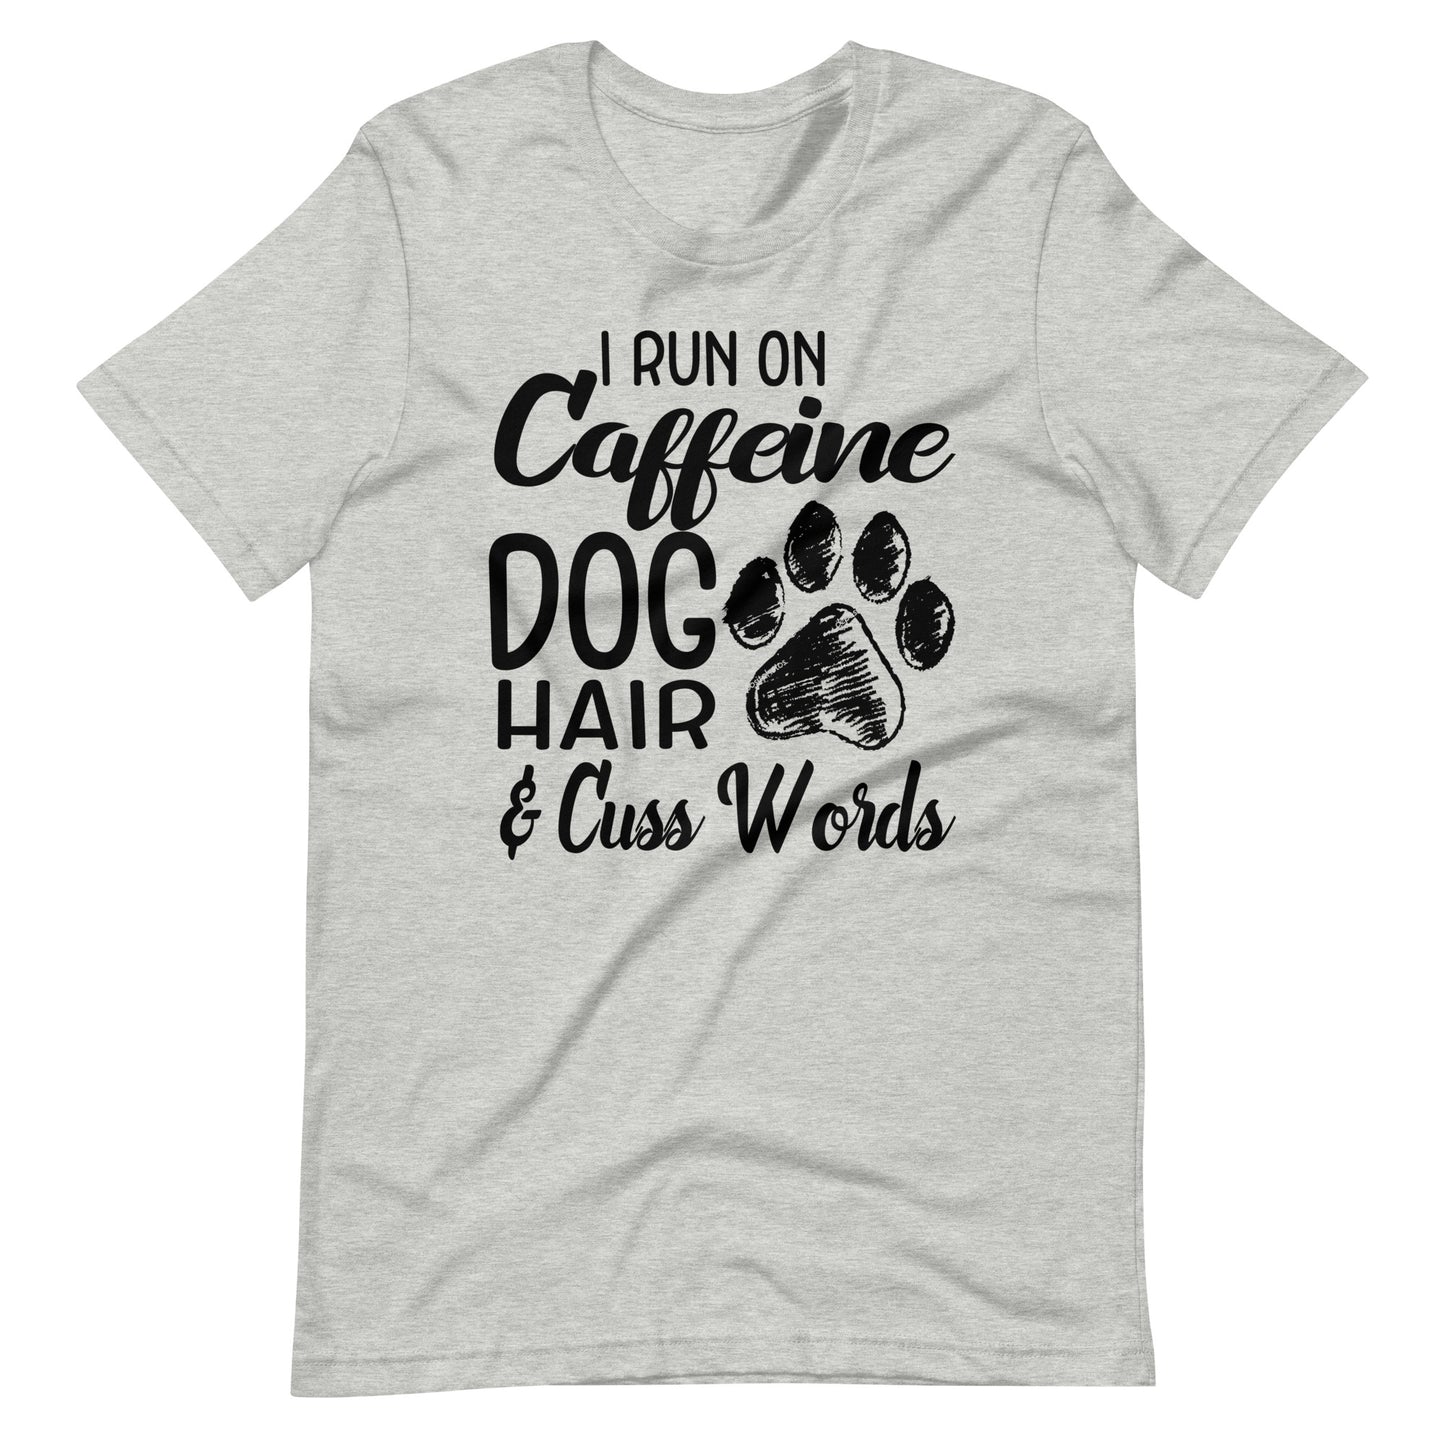 I Run on Caffeine Dog Hair & Cuss Words T-Shirt